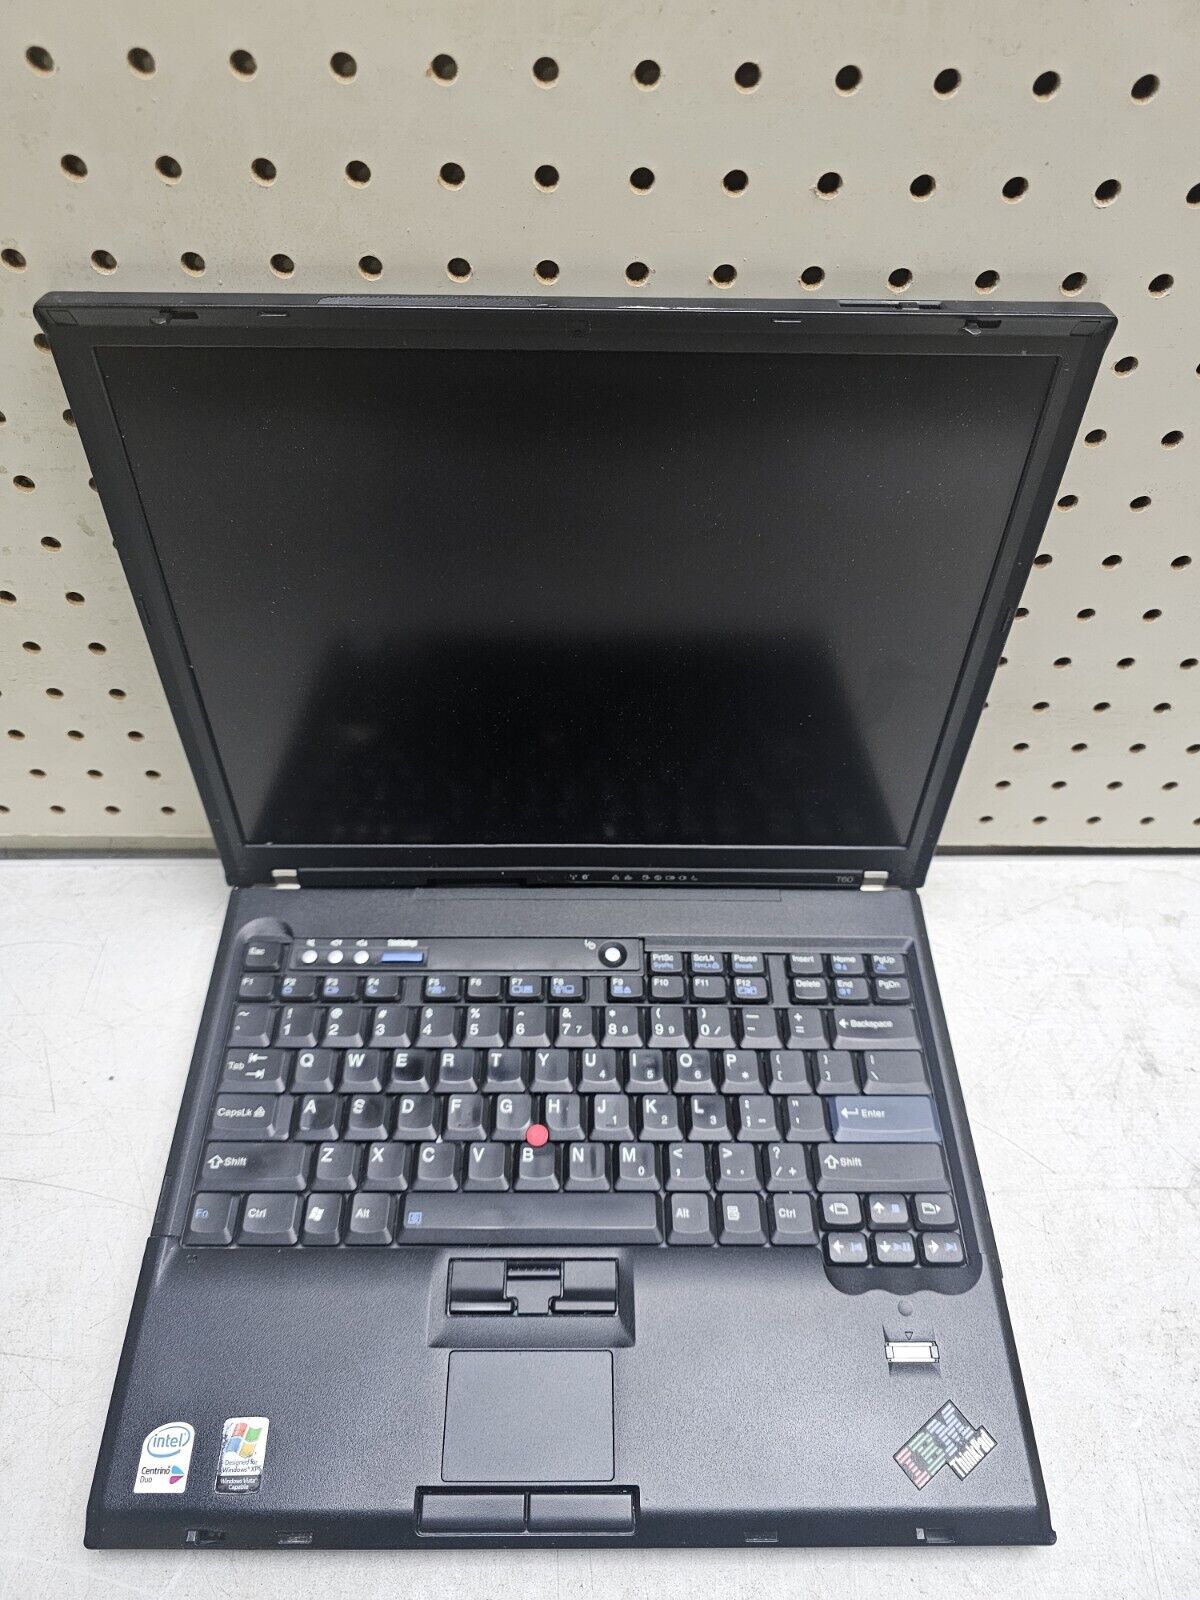 IBM ThinkPad T60 Laptop - Intel Centrino Duo - NO HDD/RAM/OS - READ DESCRIPTION